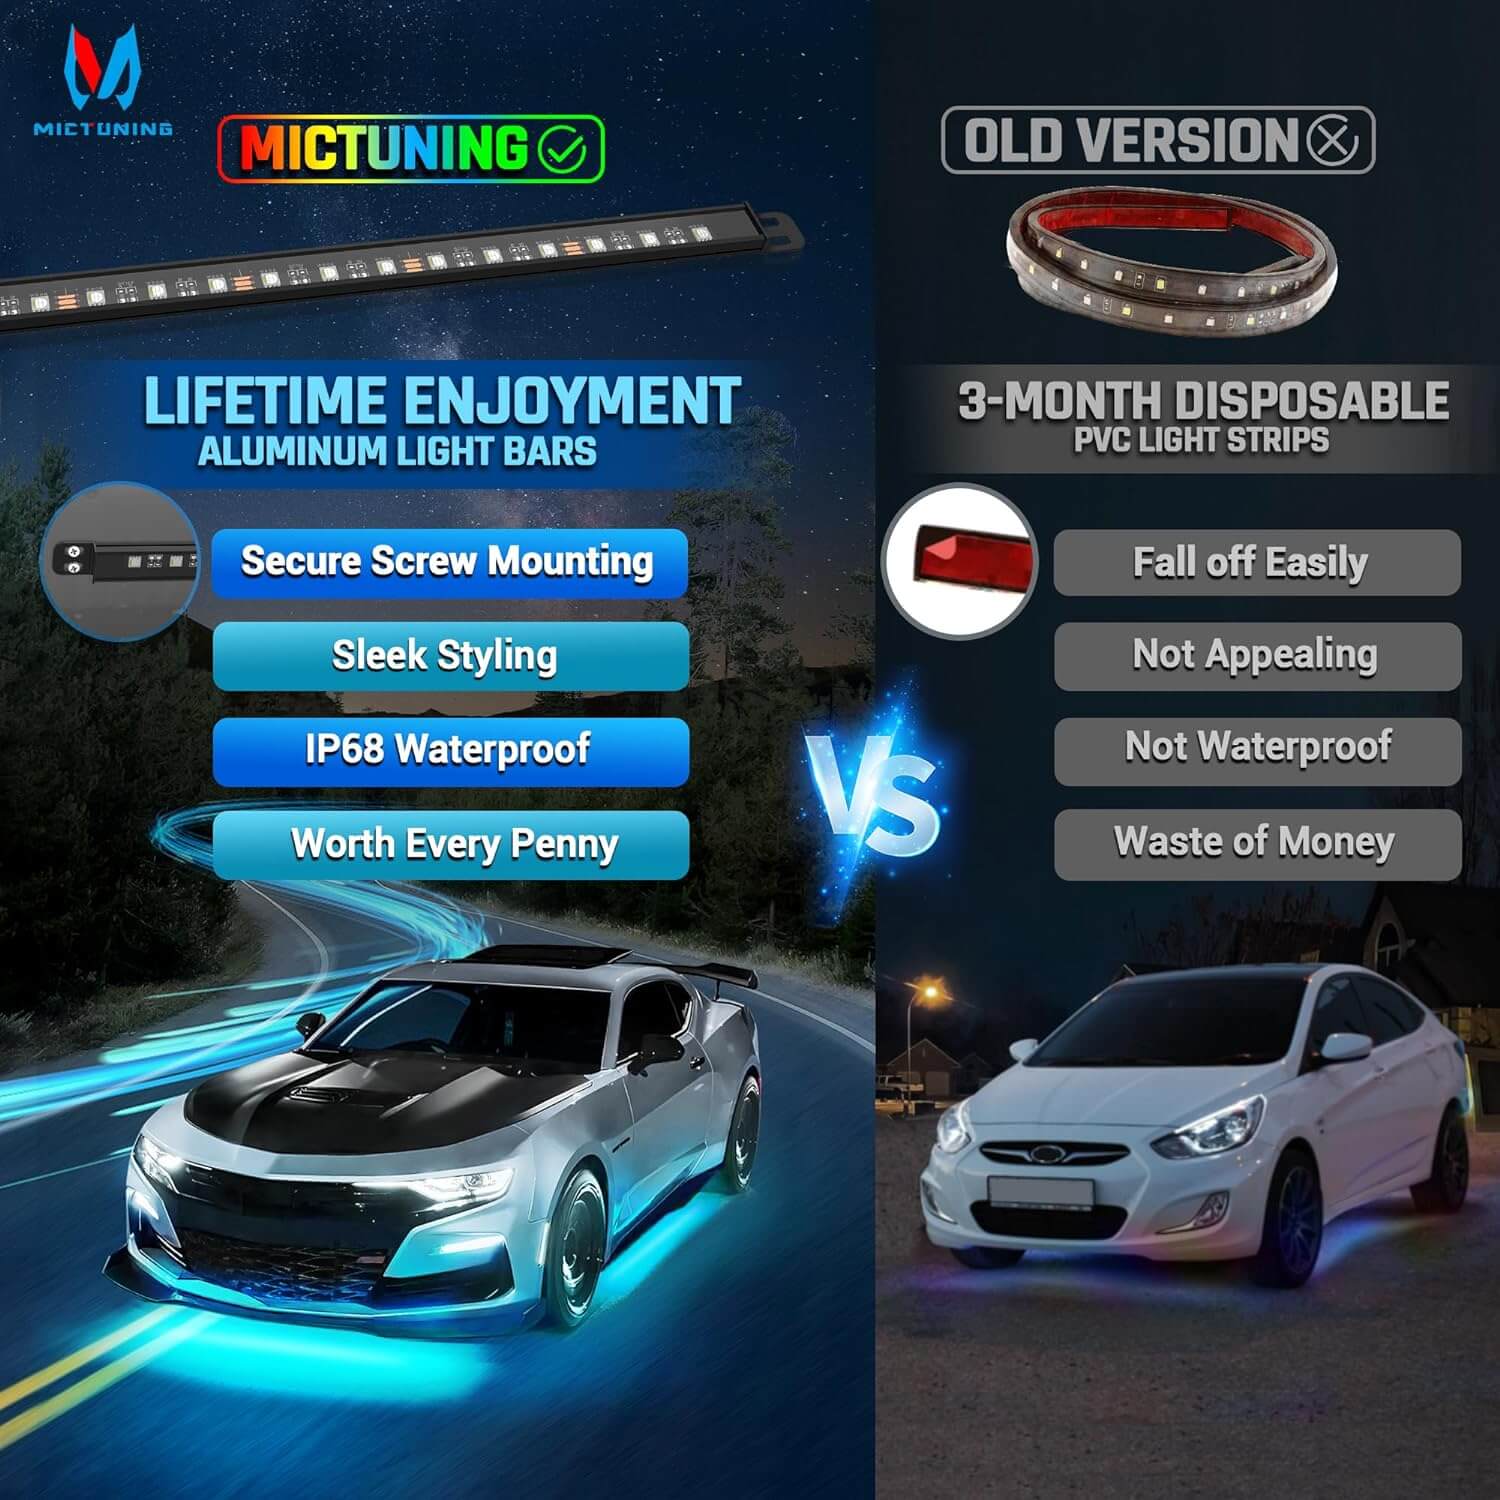 N8 RGBW LED Car Underglow Light Kit Bundle with C2 RGBW LED Rock Lights